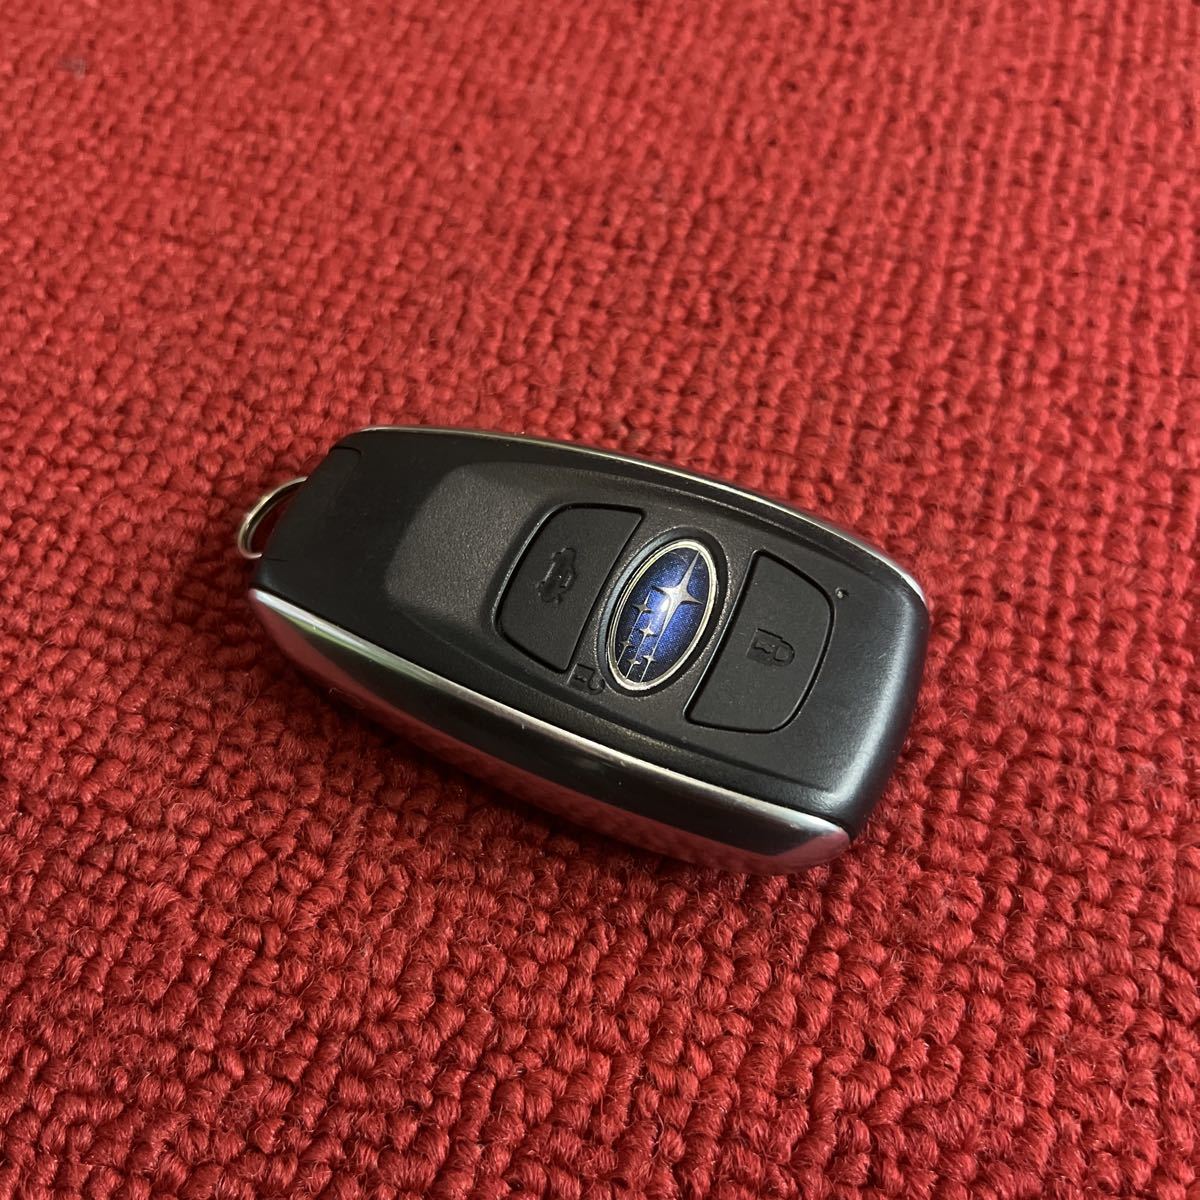  Subaru Levorg SJ Forester original smart key less remote control 3 button 281451-5801 operation has been confirmed .AB141